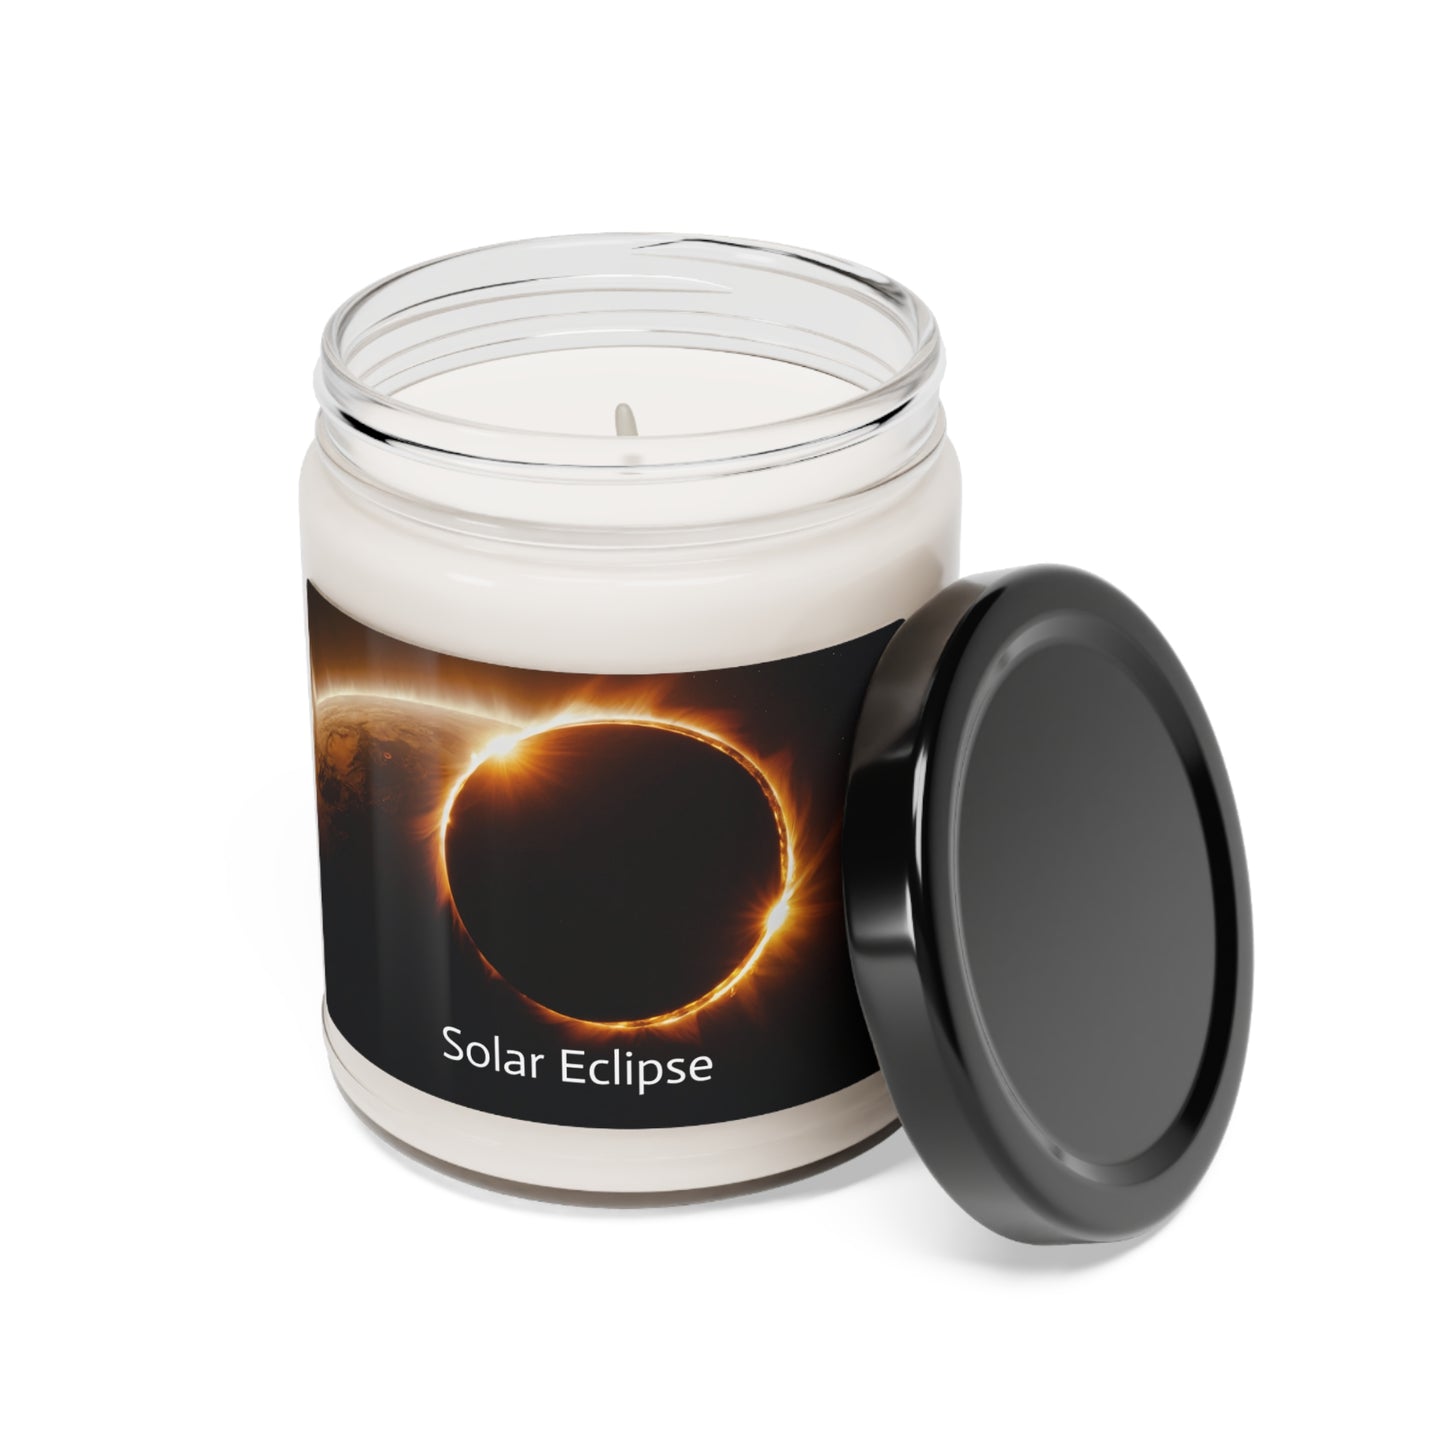 Solar Eclipse Candle: Light, Fragrance, Cosmic Charm 9oz $19.99